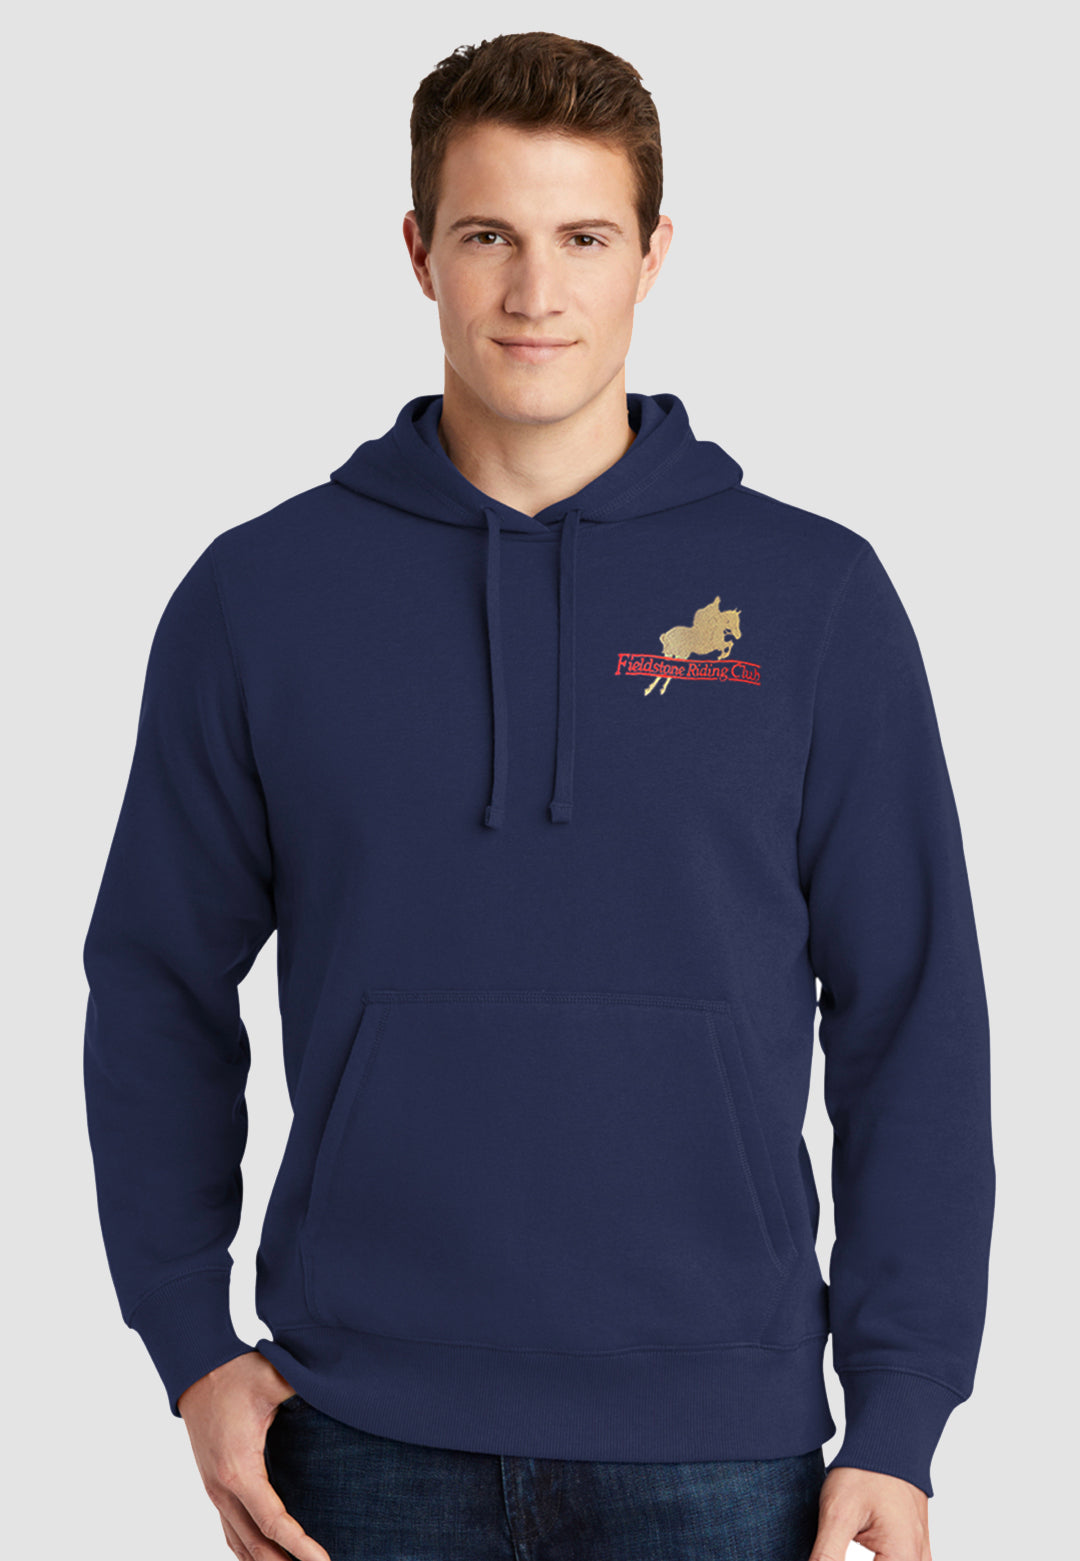 Fieldstone Riding Club Sport-Tek®  Navy Hooded Sweatshirt - Adult + Youth Sizes